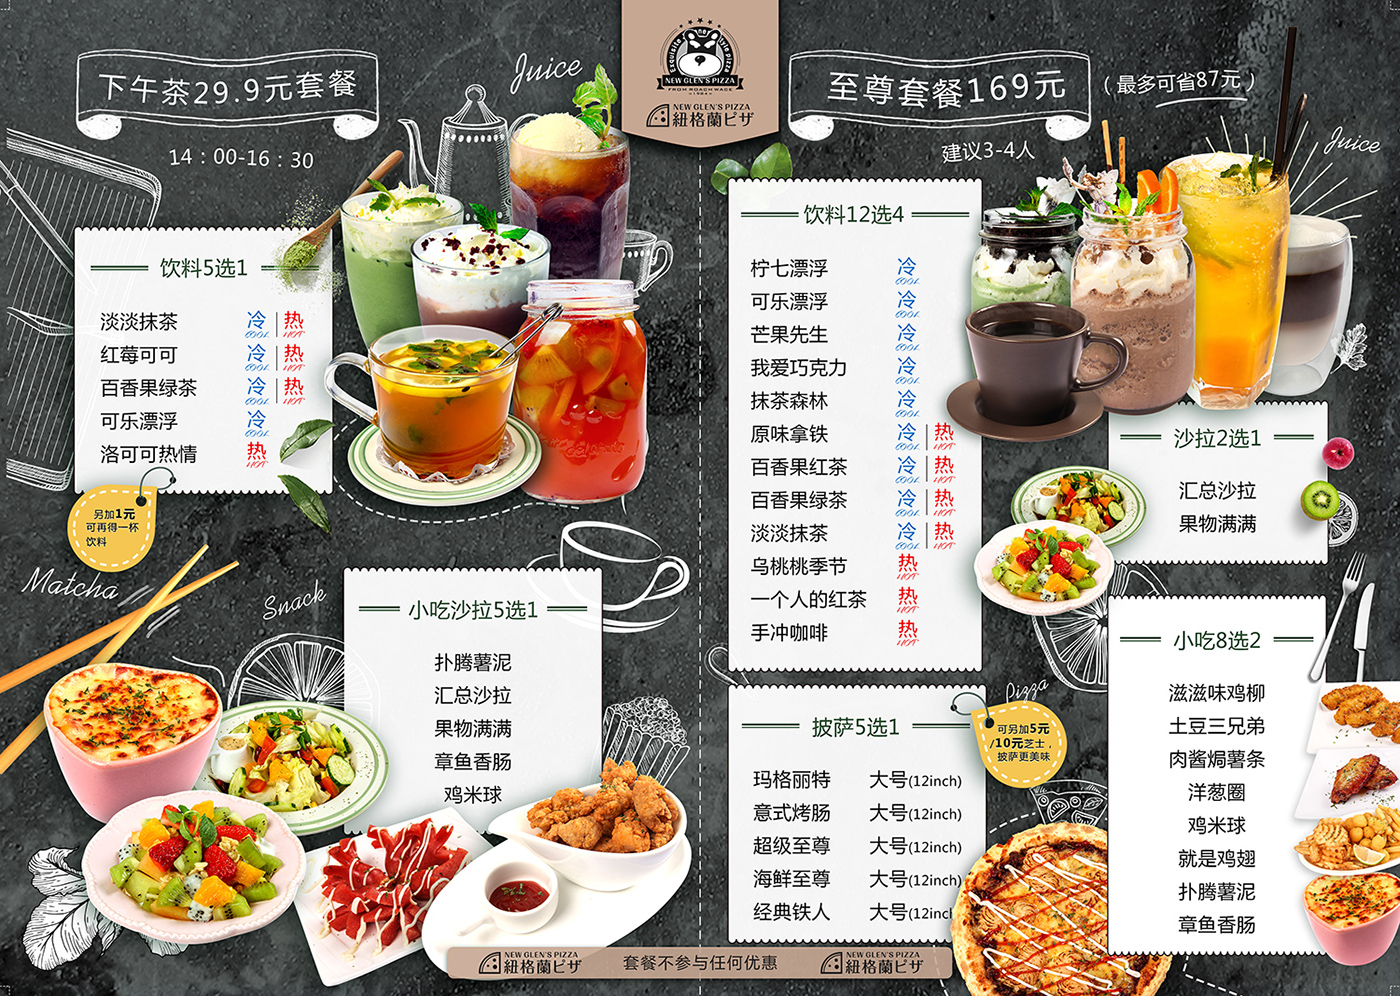 Caesar s place menu for diabetics cara logout instaforex mt4